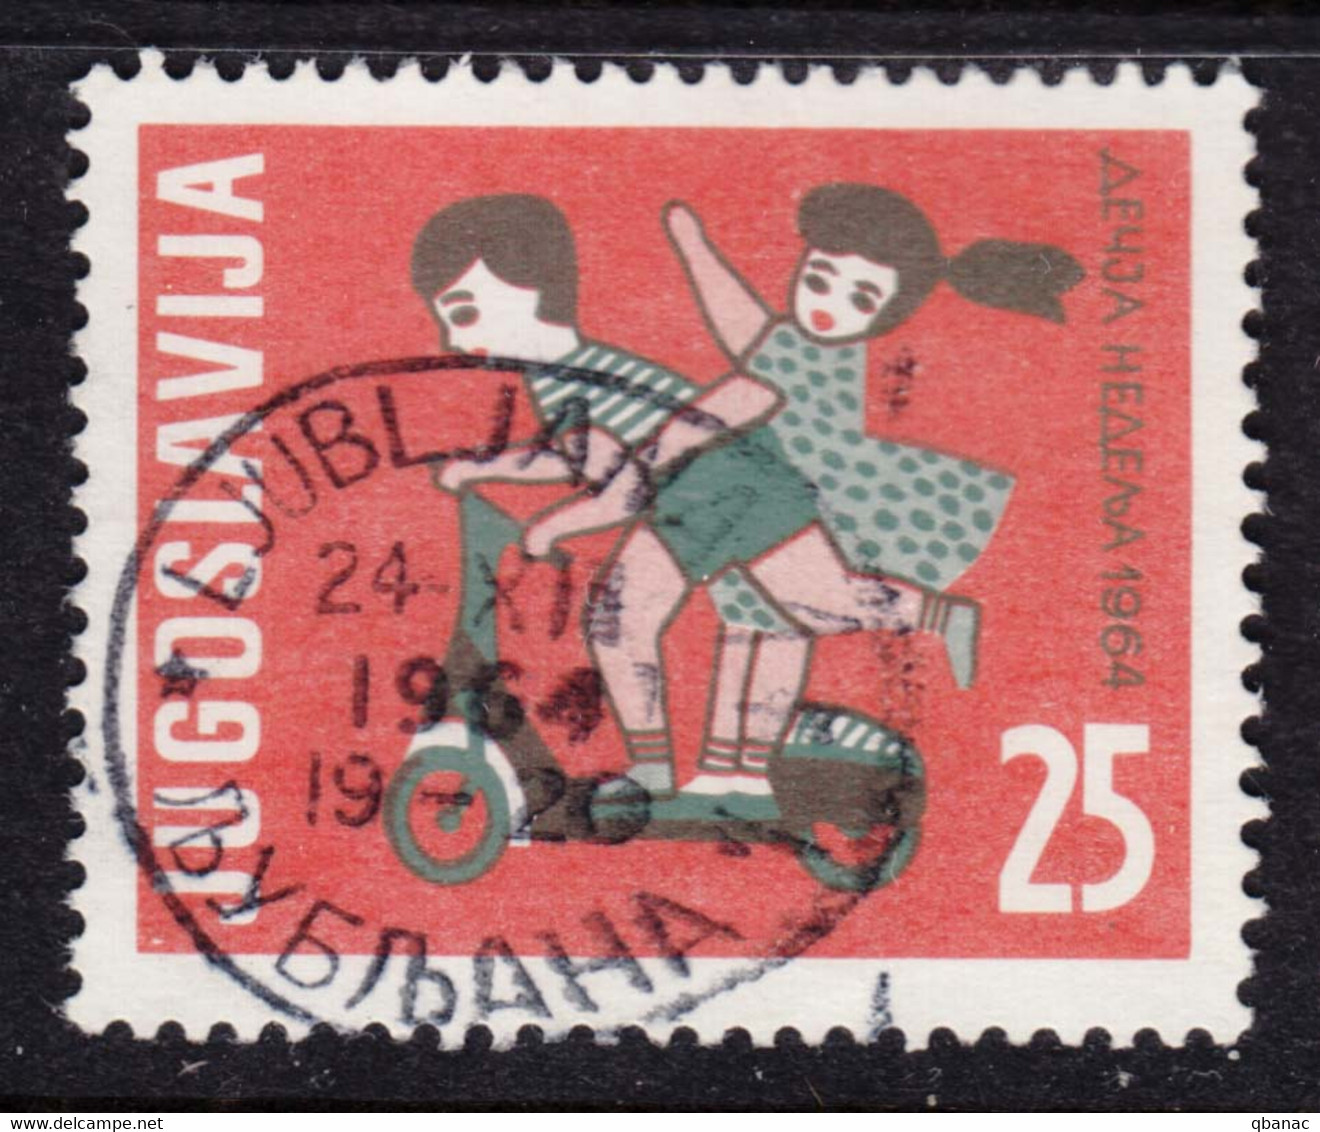 Yugoslavia Republic 1964 Mi#1093 Used - Used Stamps